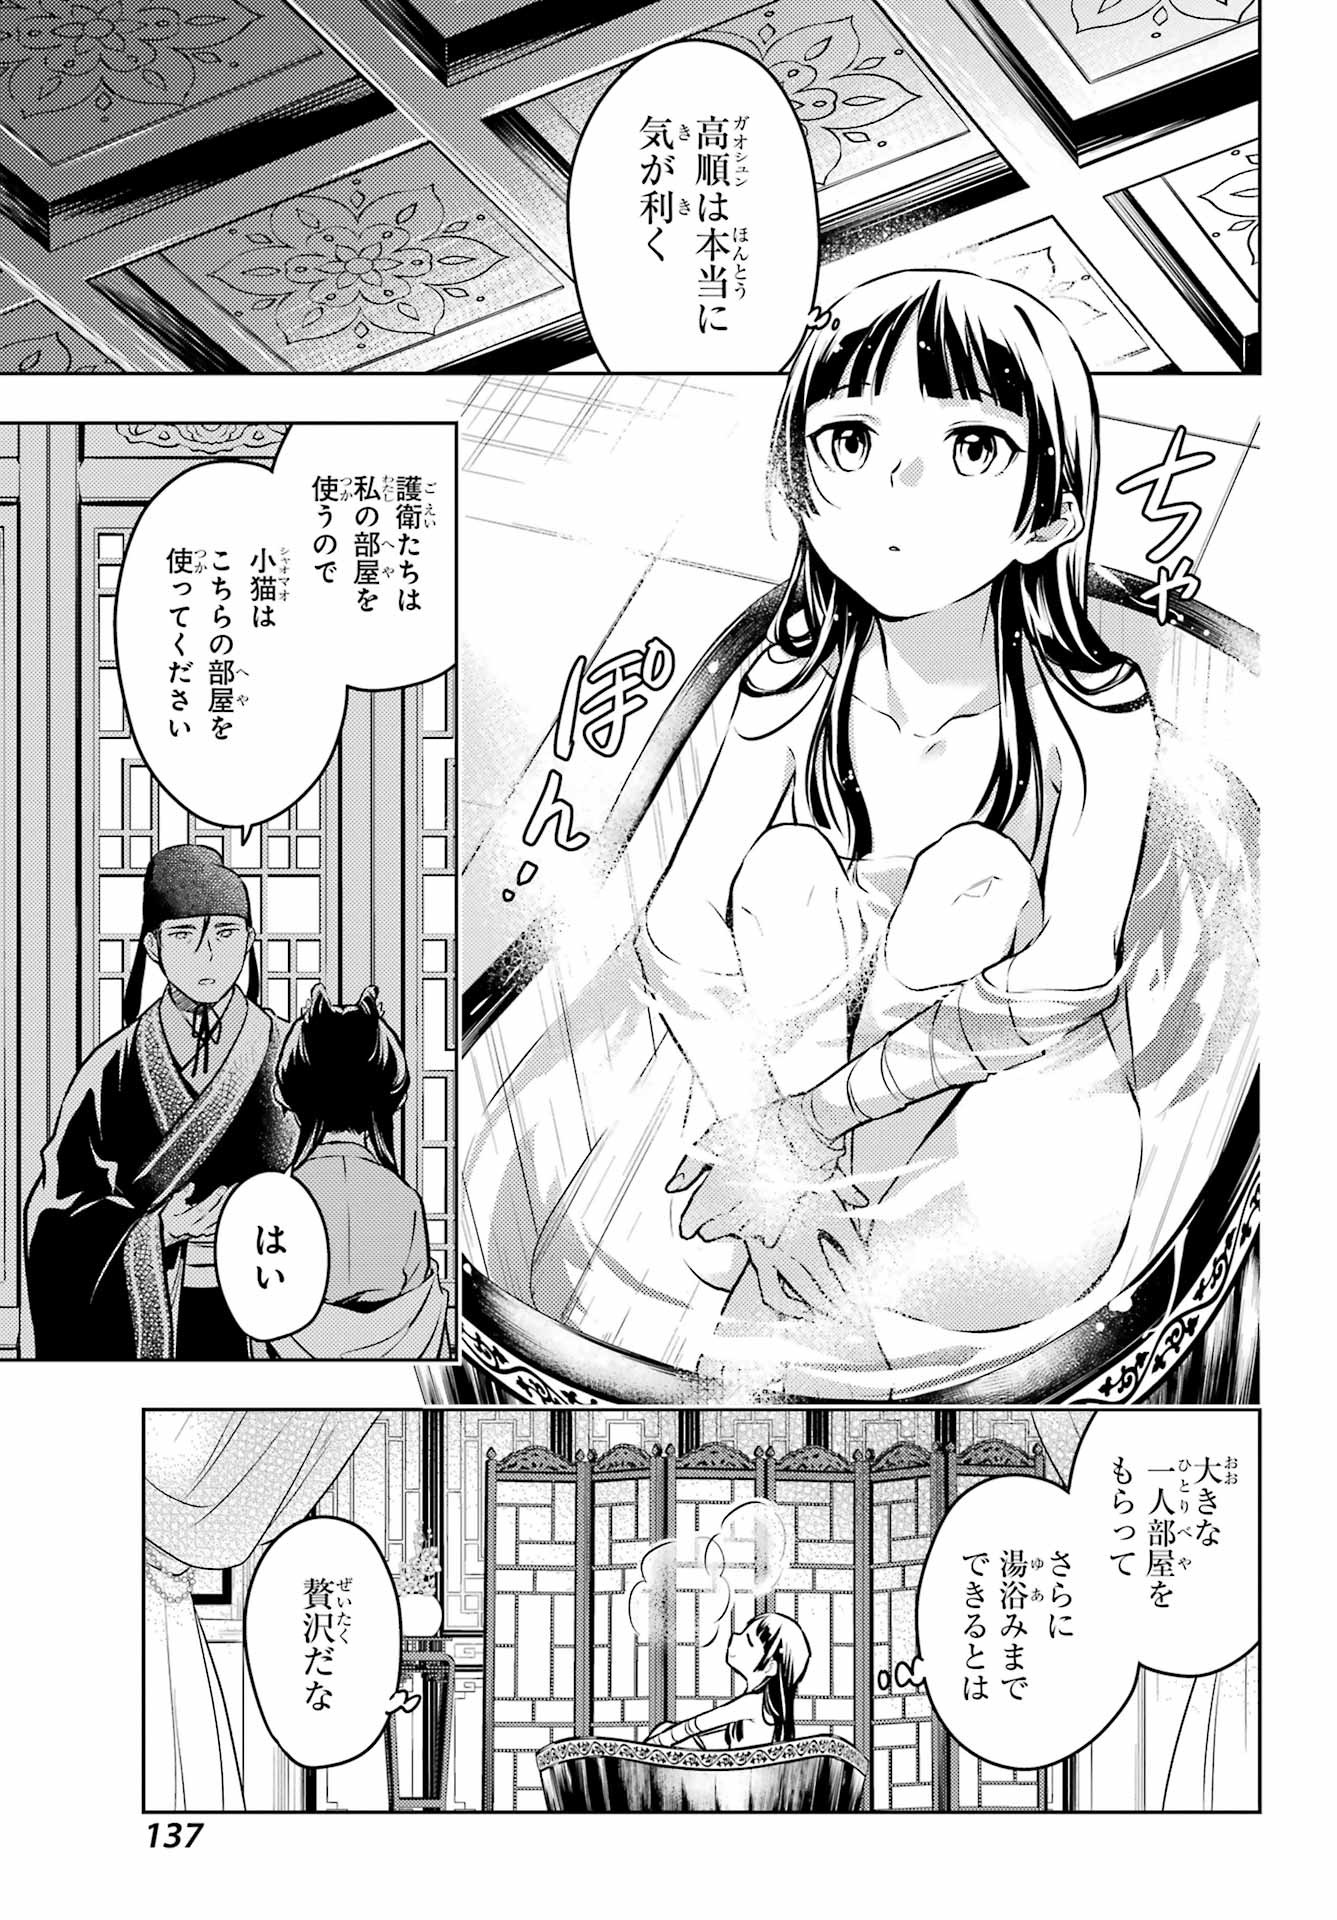 Kusuriya no Hitorigoto - Chapter 60-2 - Page 13